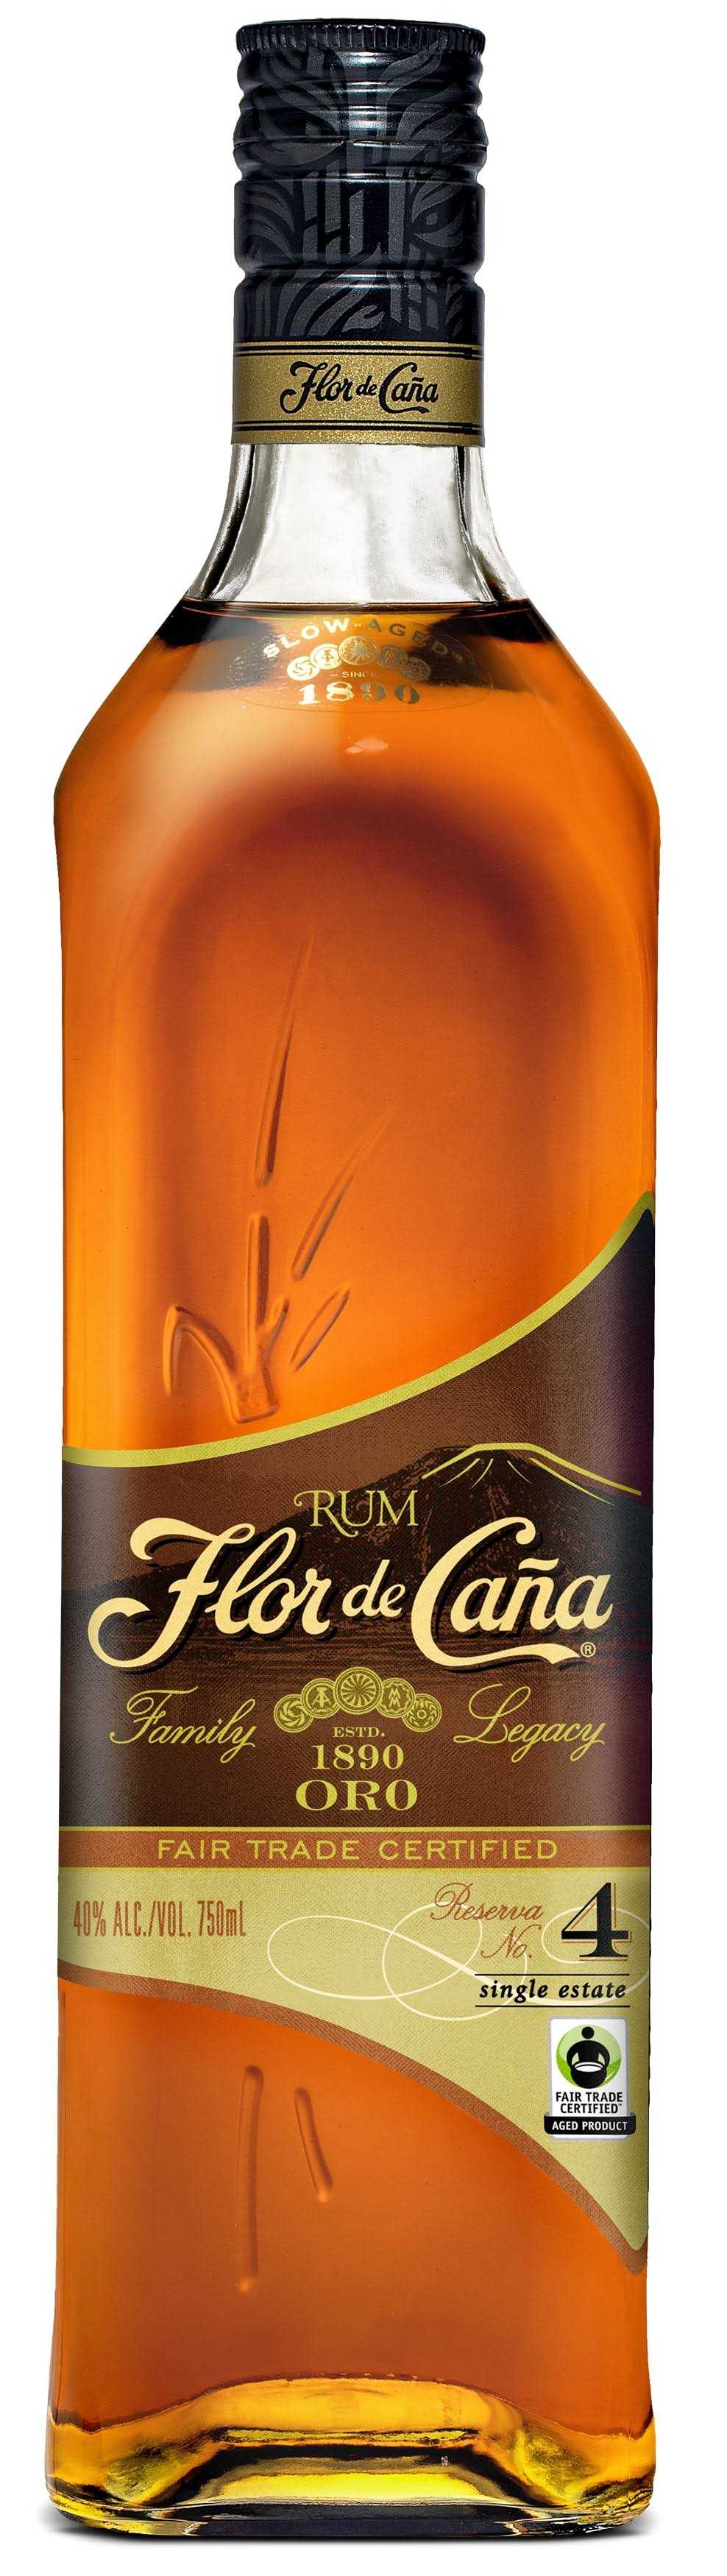 Flor De Cana Gold Rum